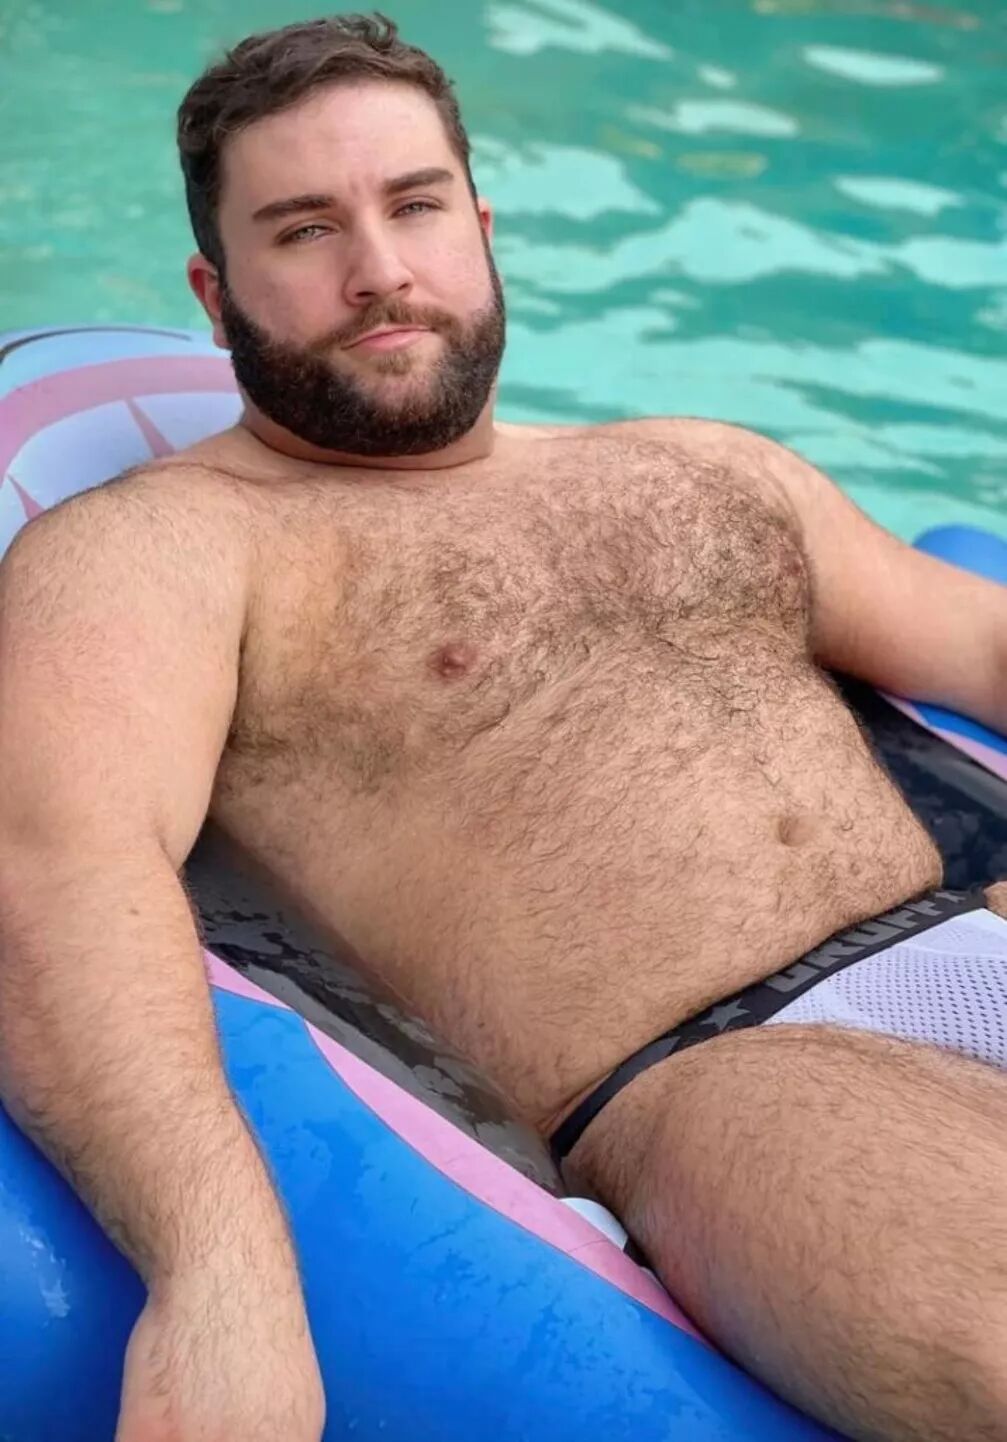 A hunky bear lounging in a pool floaty wears a white mesh jockstrap